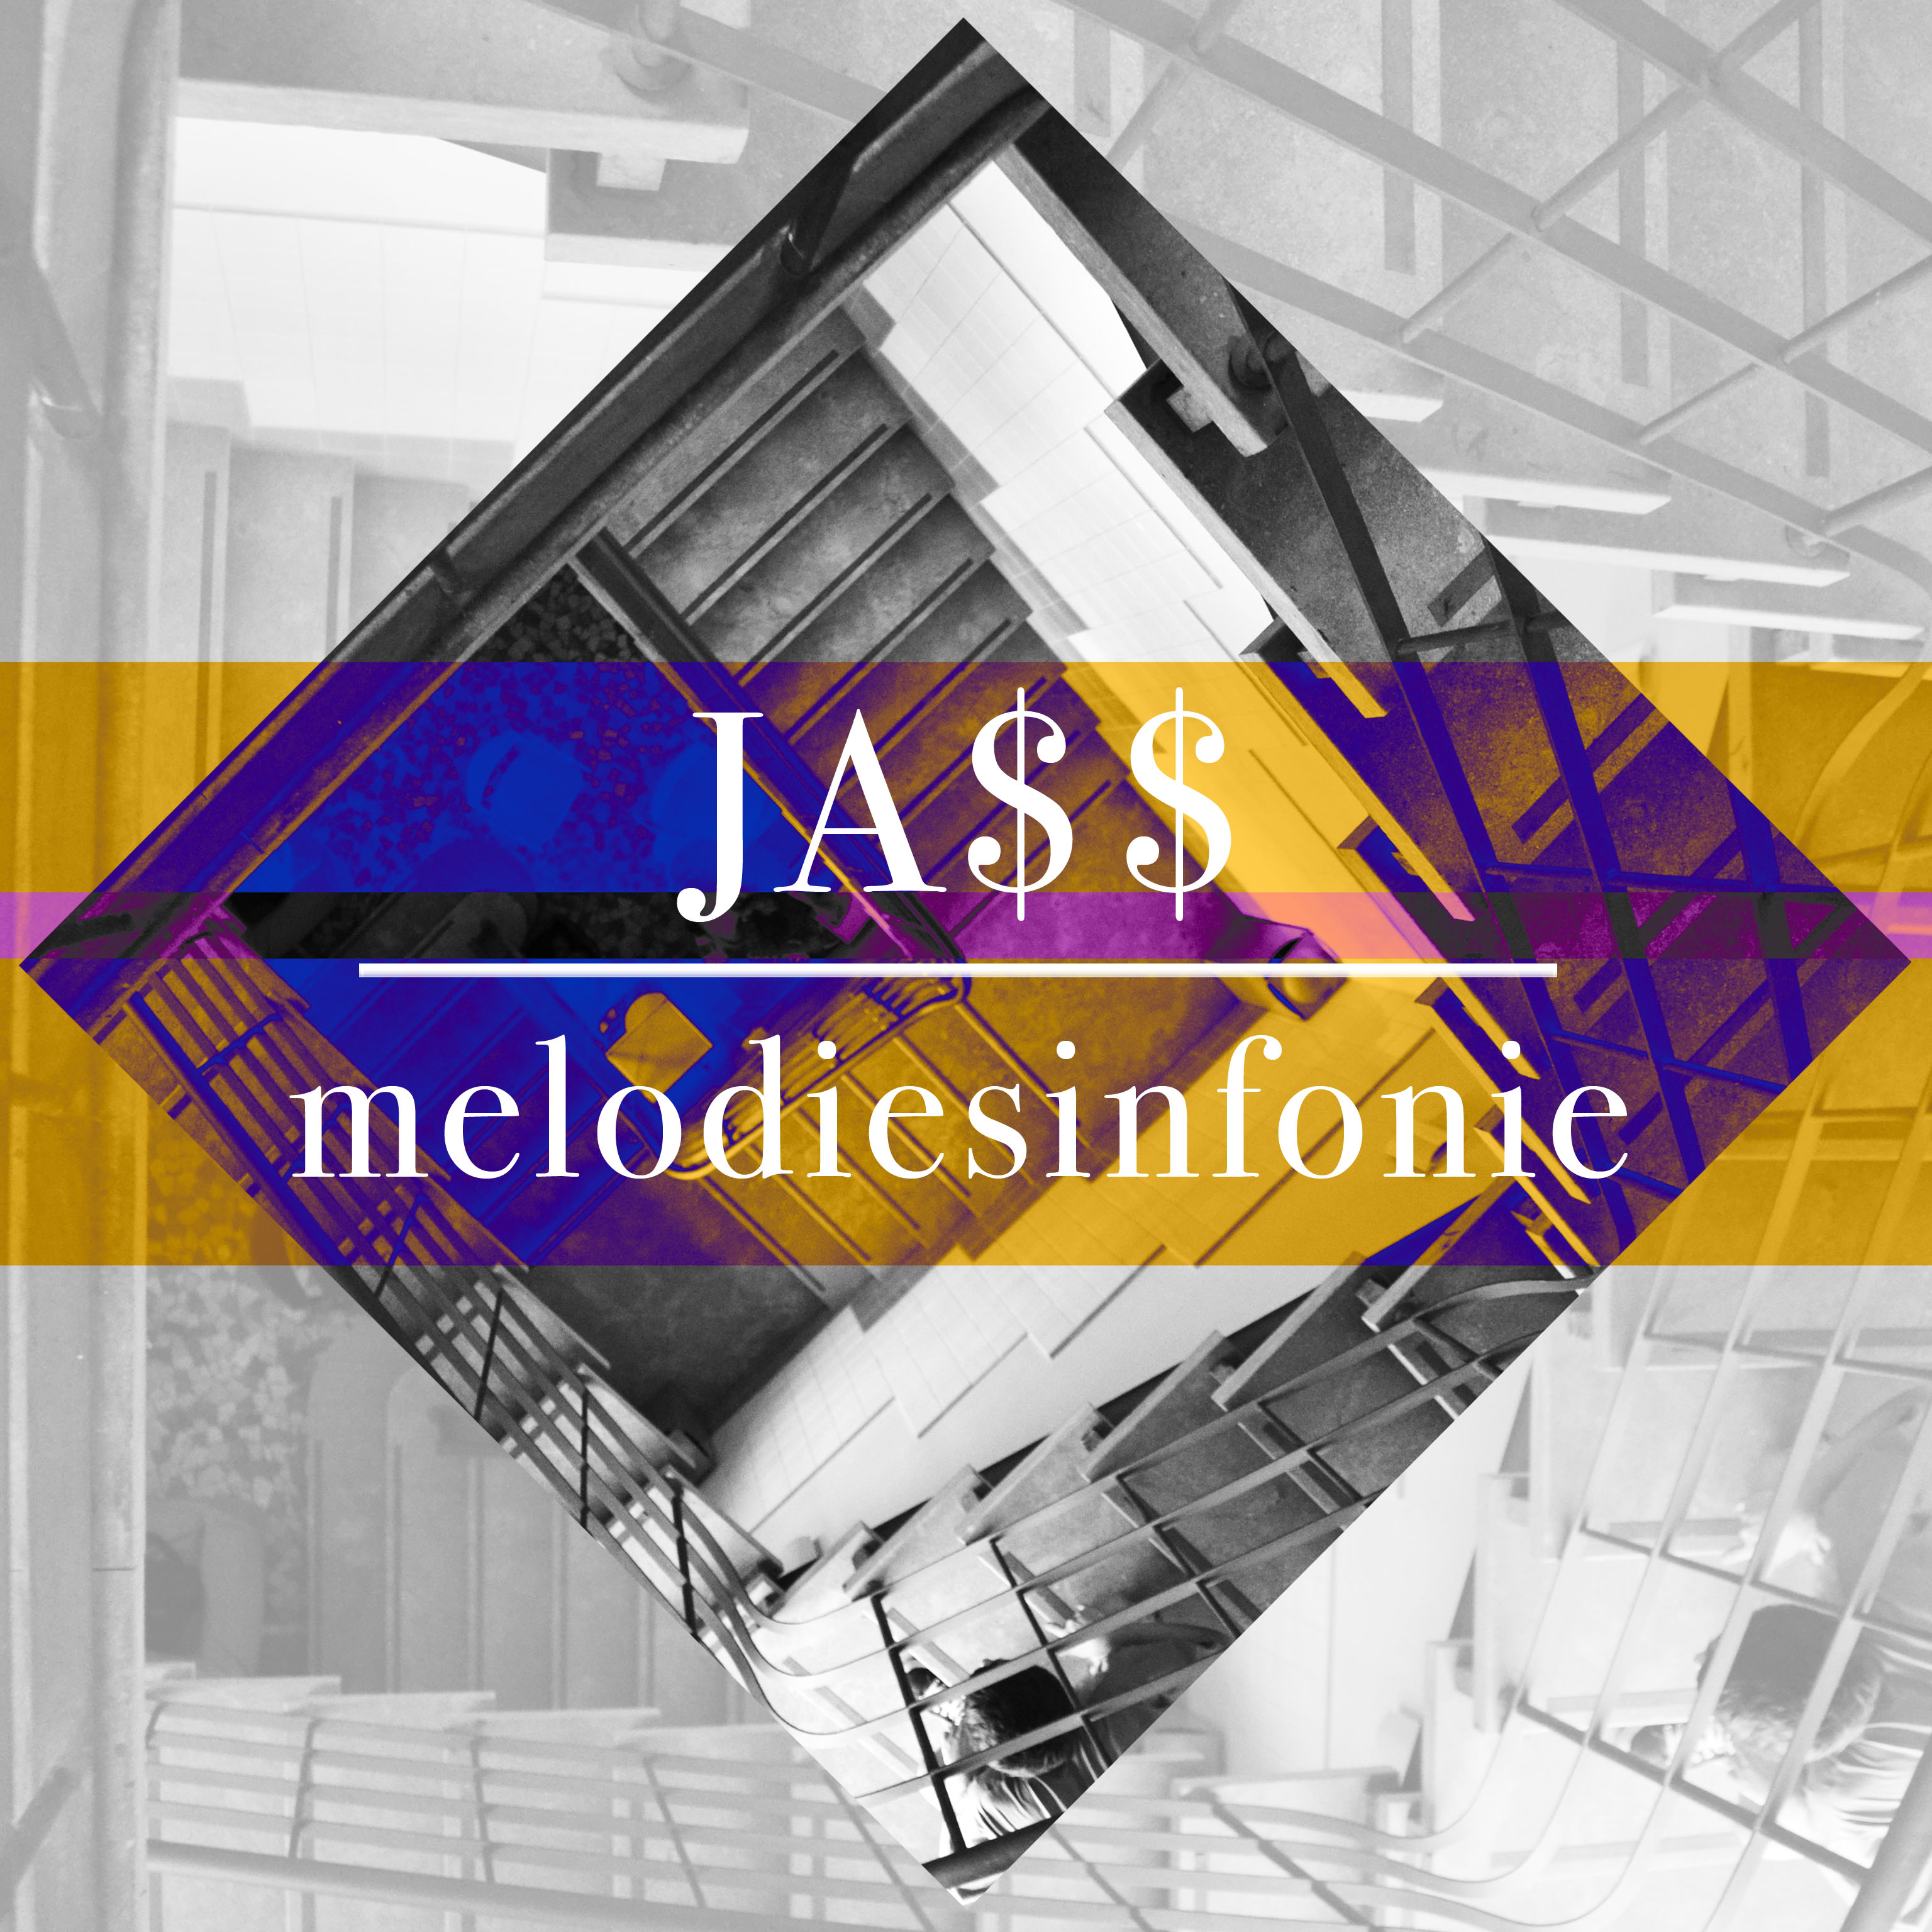 Free Download: Melodiesinfonie – Ja$$